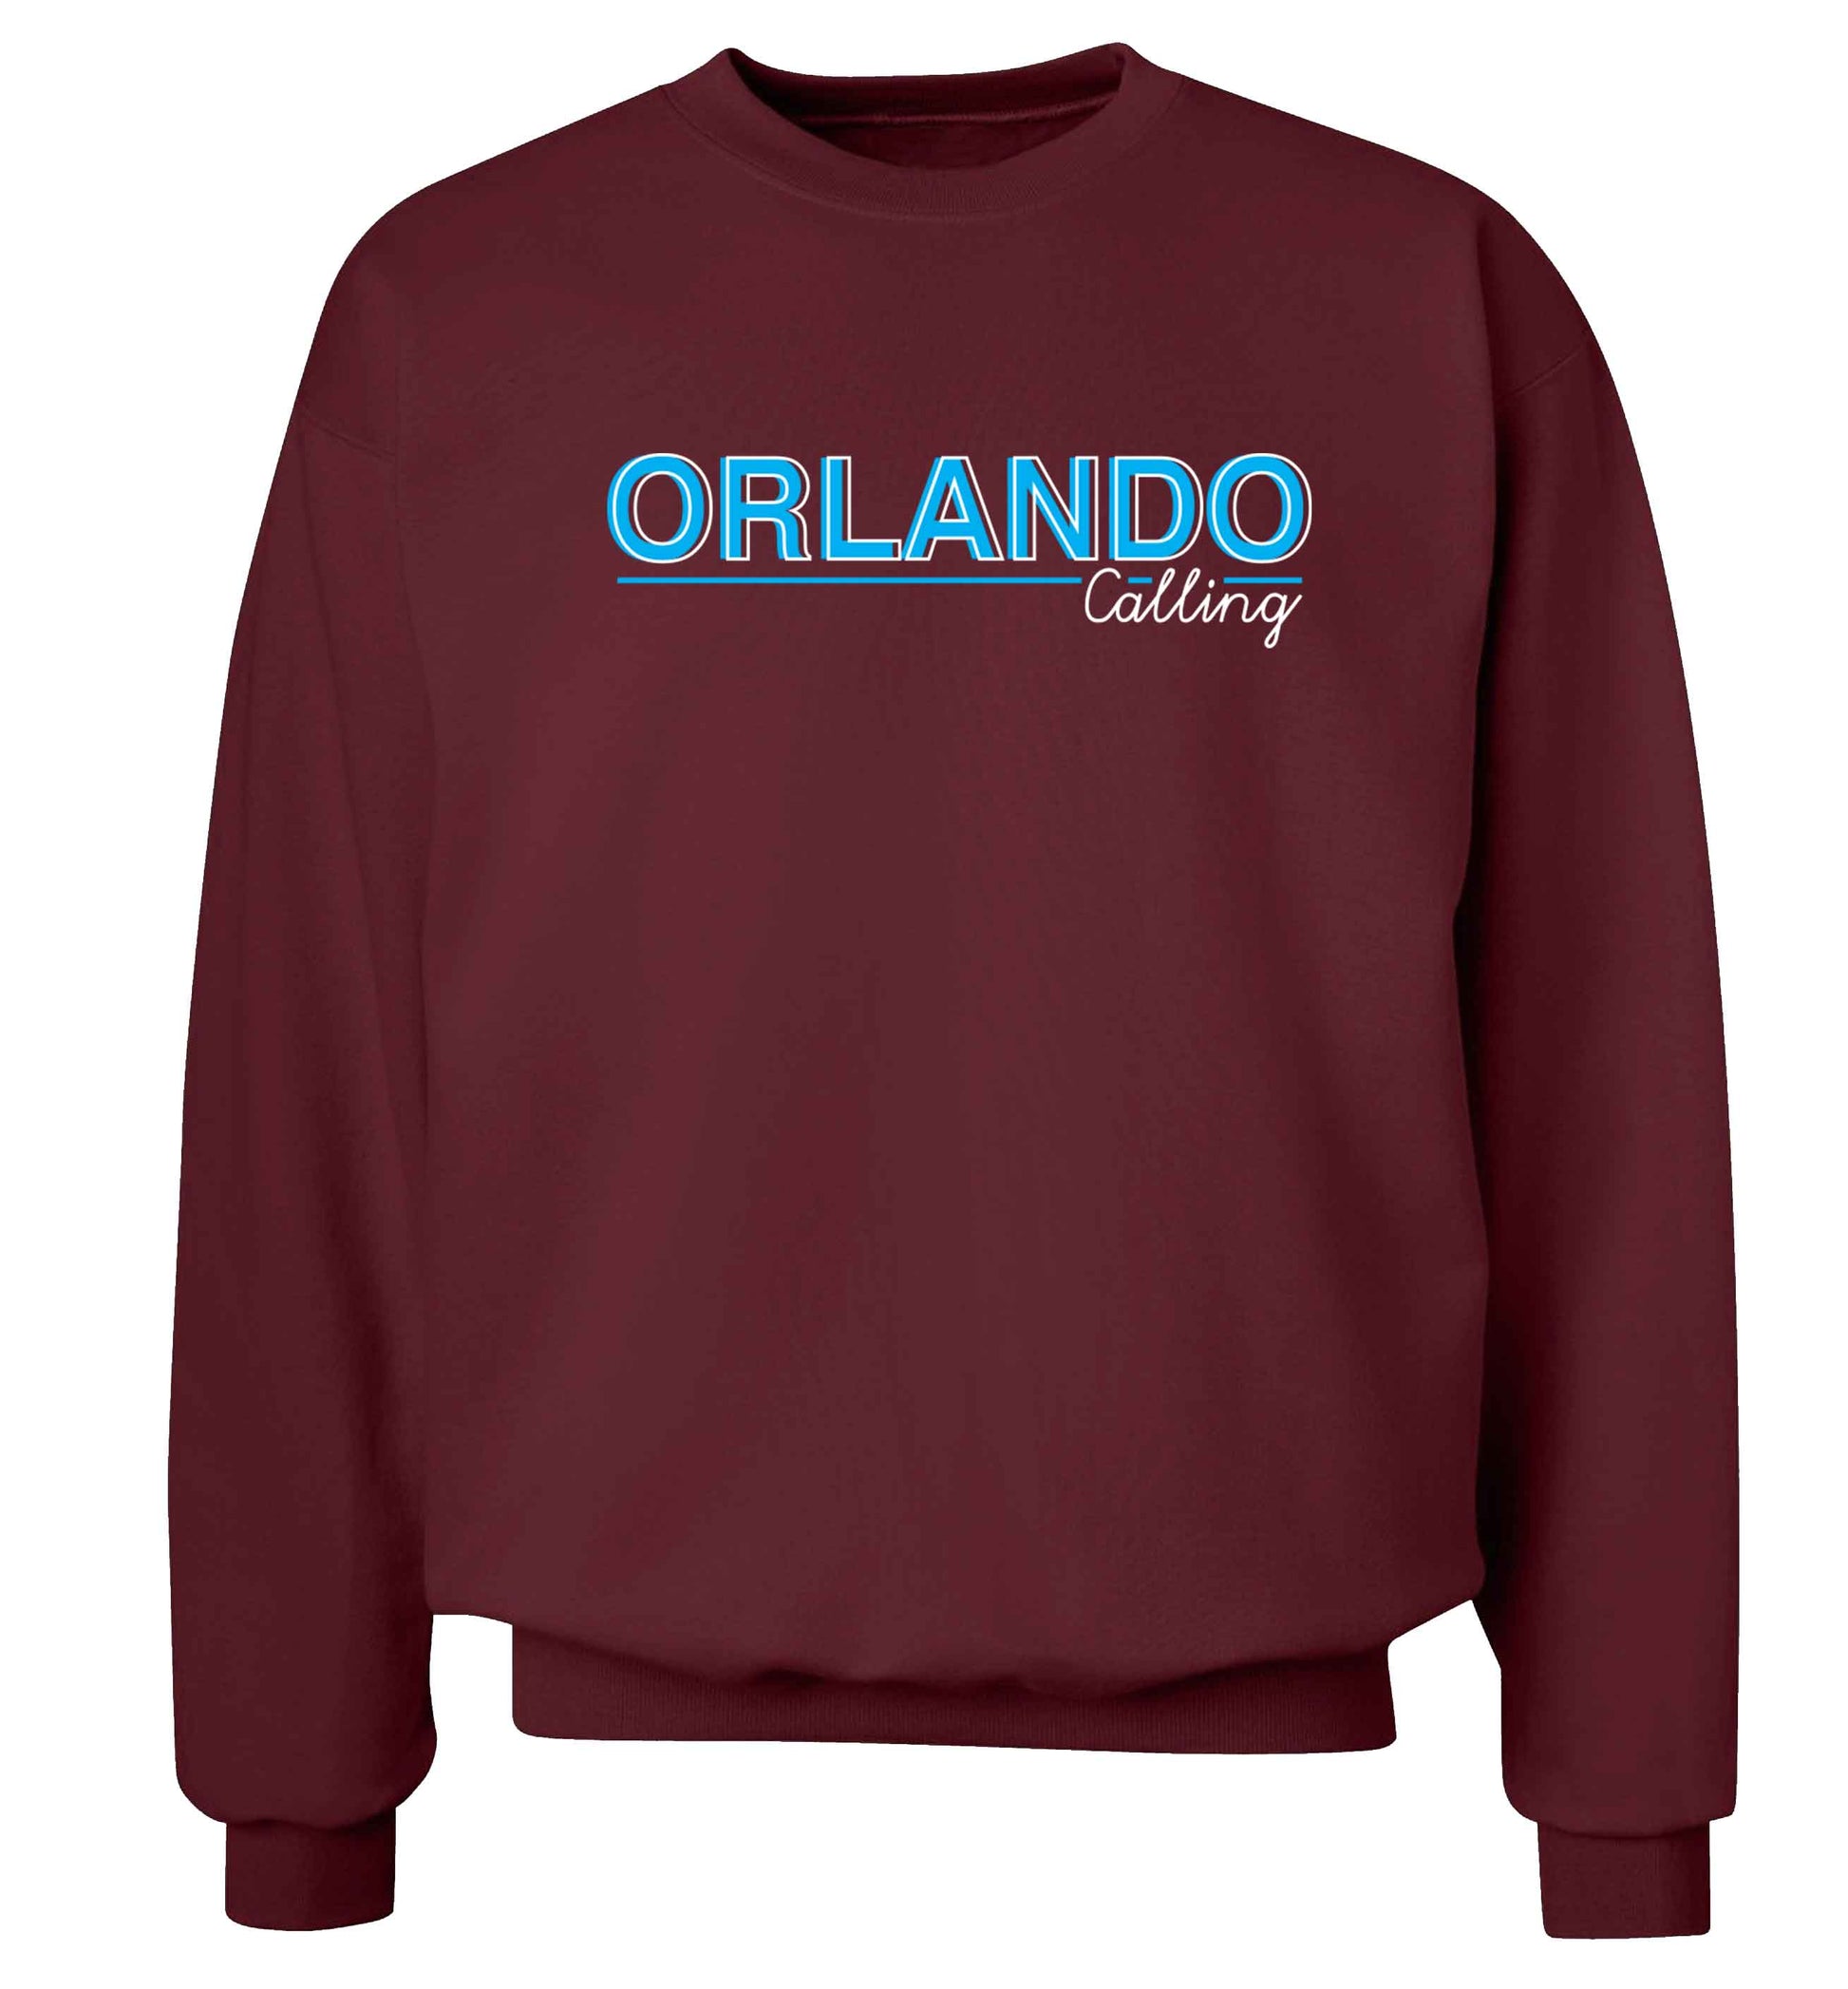 Orlando calling Adult's unisex maroon Sweater 2XL